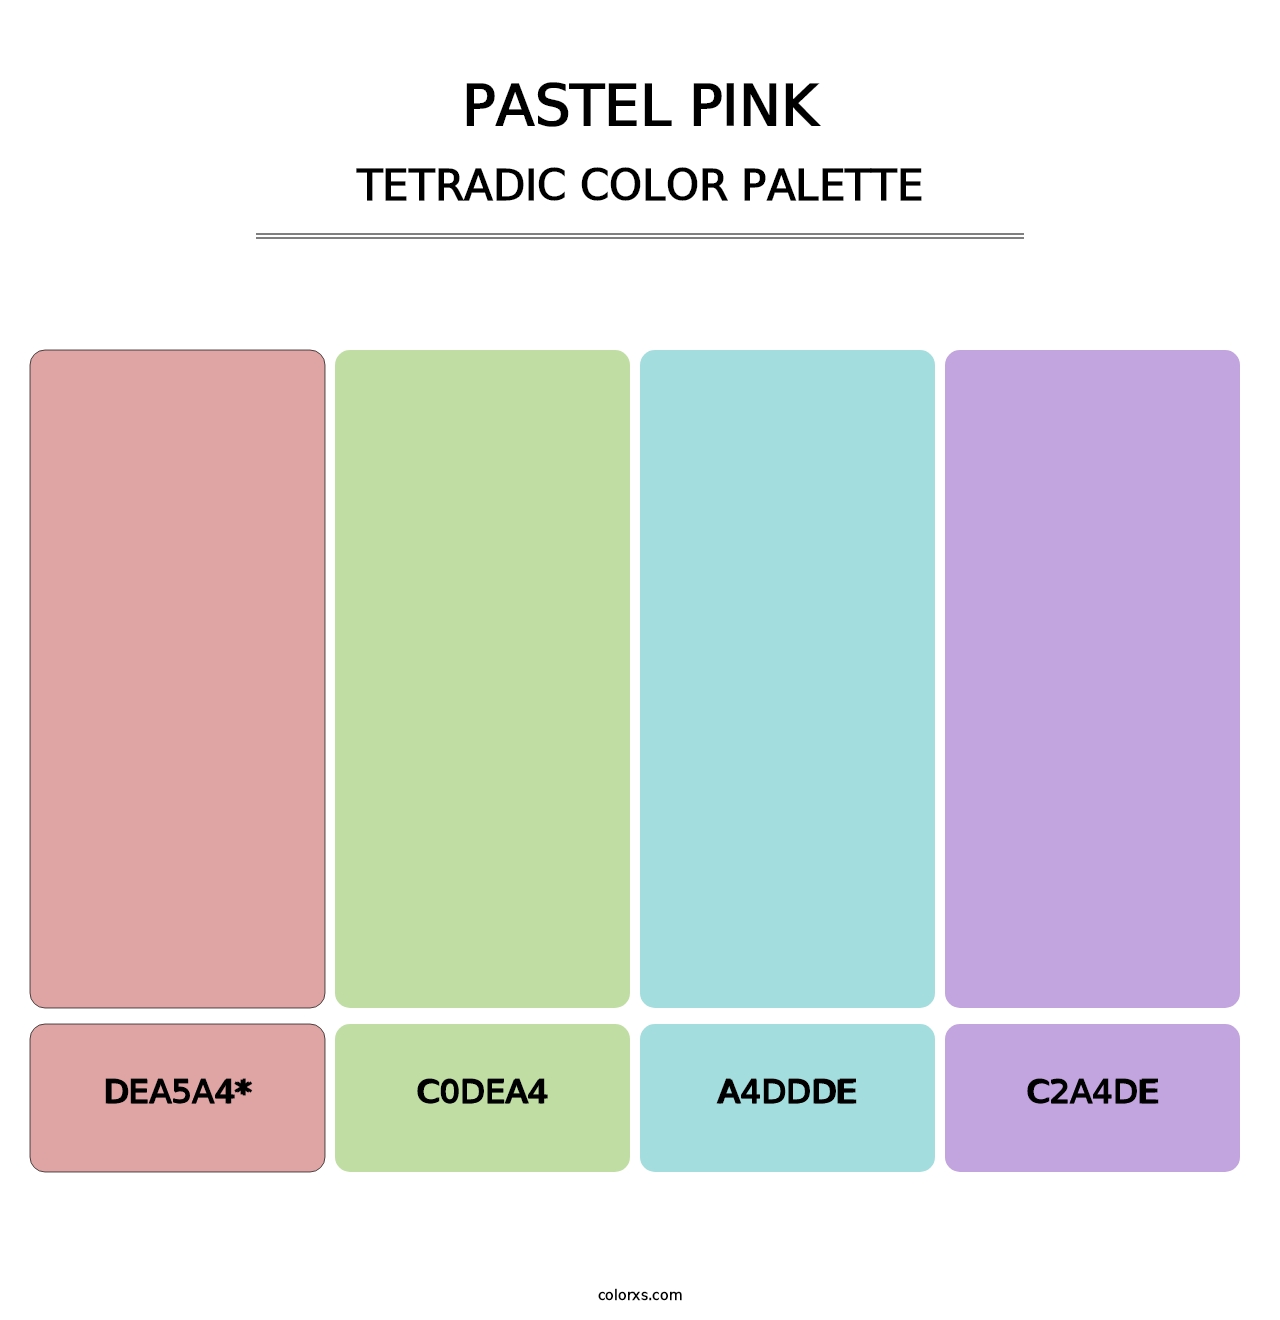 Pastel Pink - Tetradic Color Palette